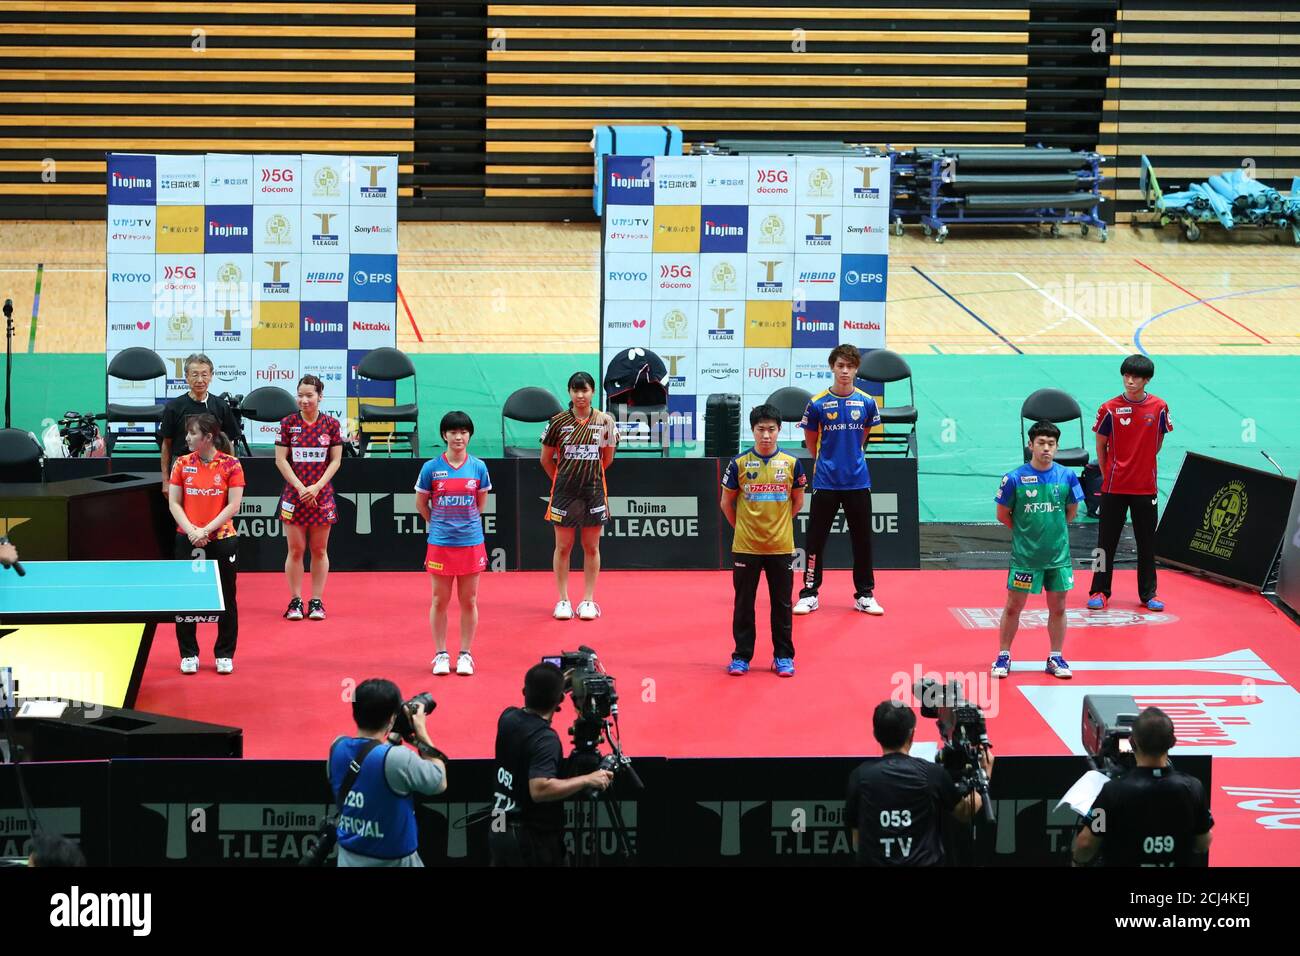 Tokyo Japan 14th Sep Tt League Selection Team Group Table Tennis T League Japan All